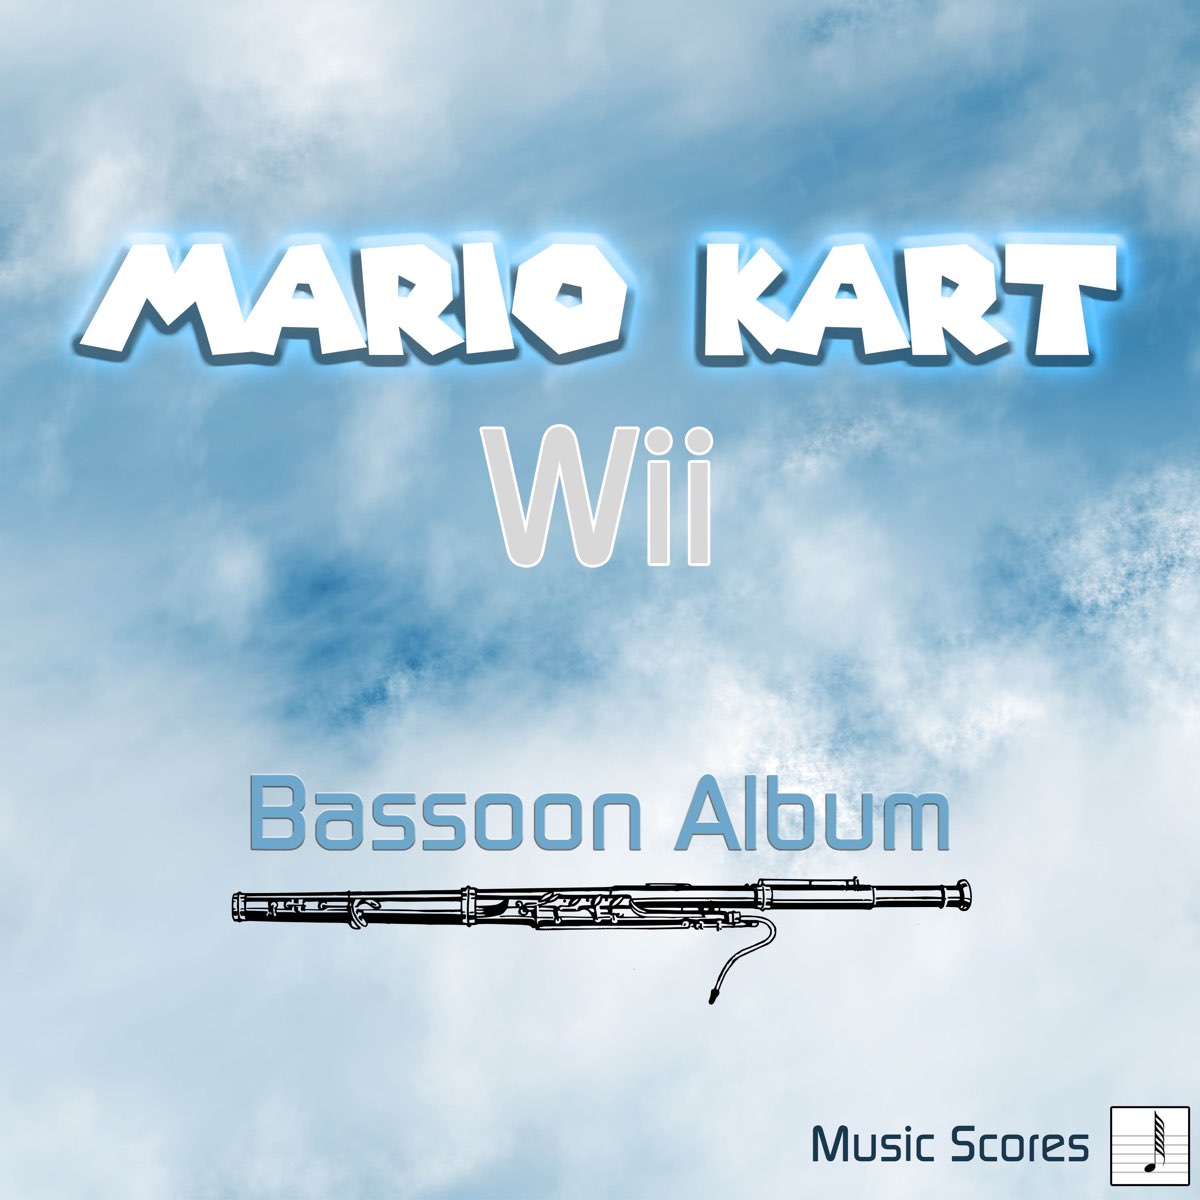 Mario Kart Wii (Bassoon Album) by Music Scores on Apple Music